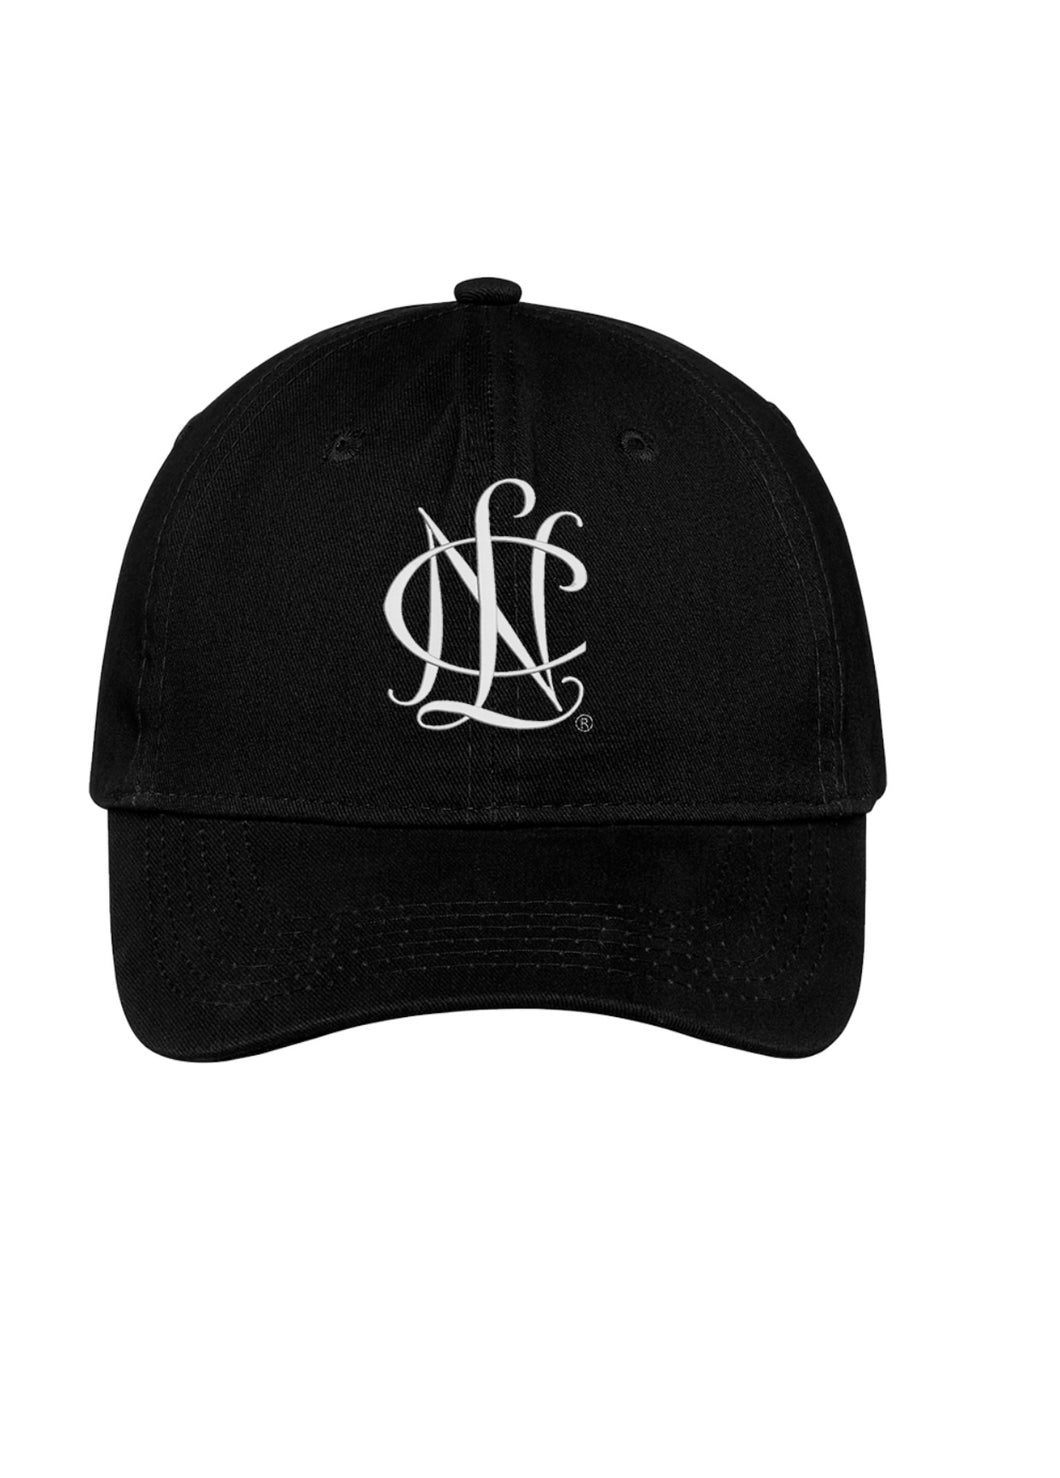 Baseball Hat, Black